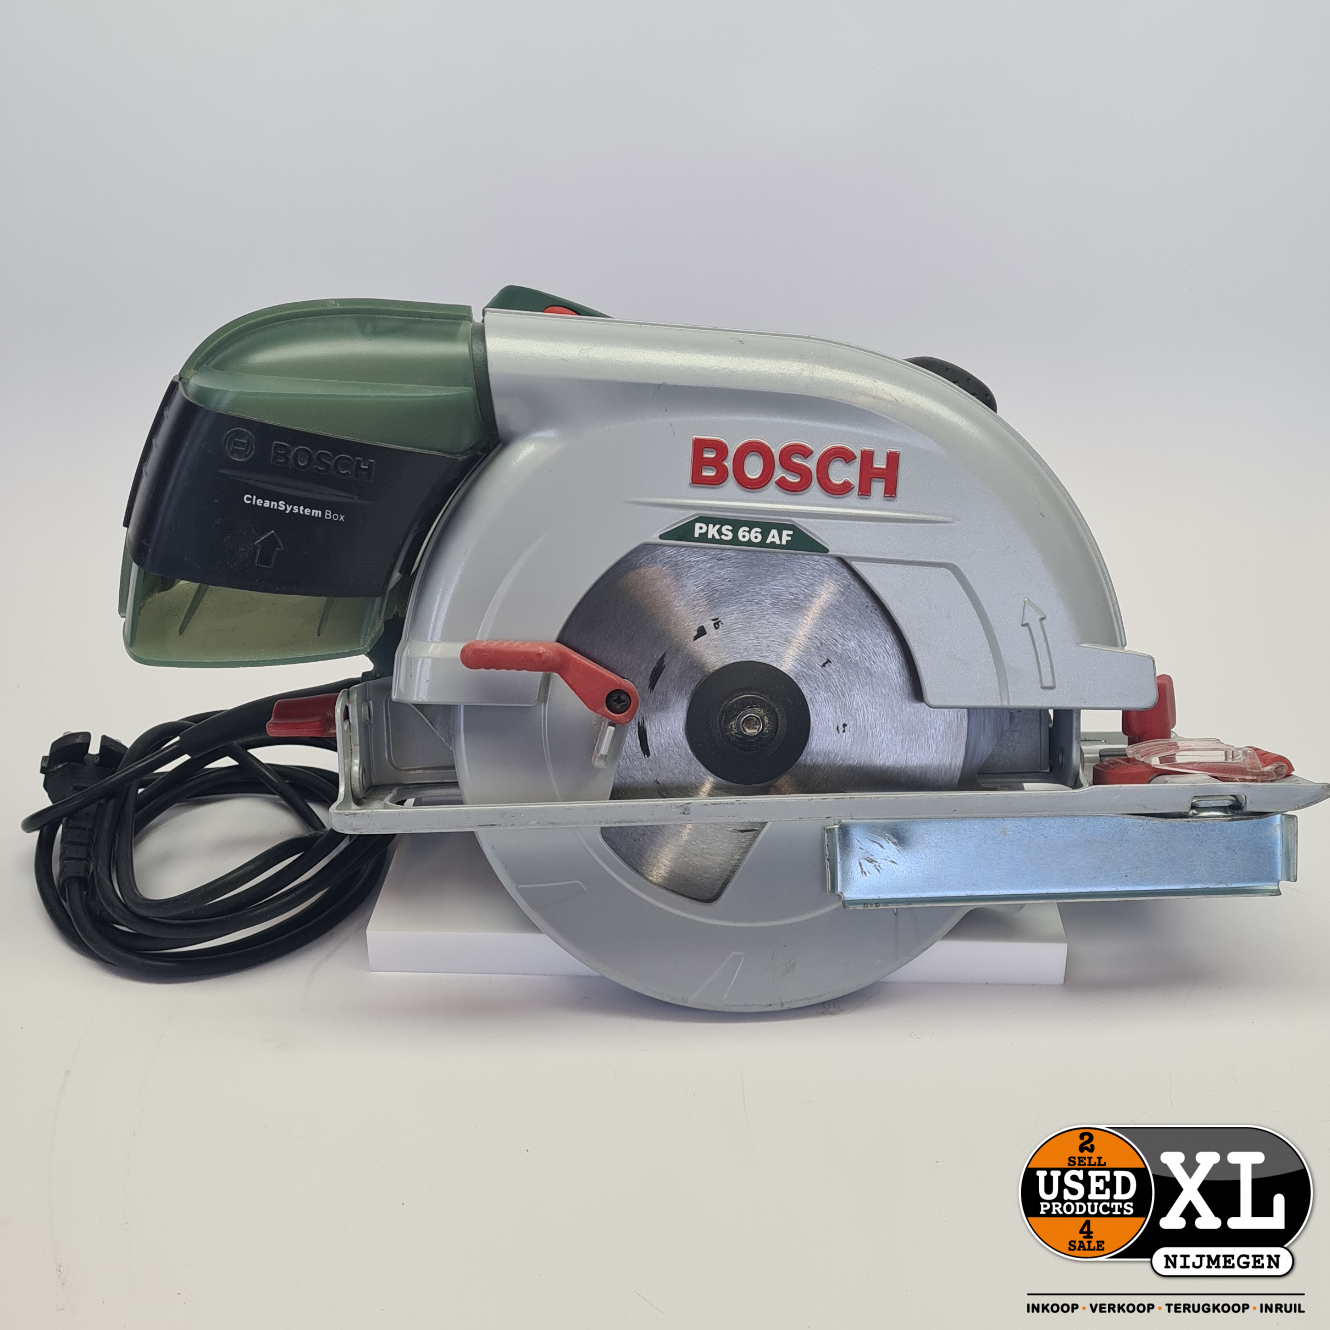 draadloos Middel Sleutel Bosch PKS 66 AF Hand Cirkelzaag 1600W | met Garantie - Used Products  Nijmegen XL